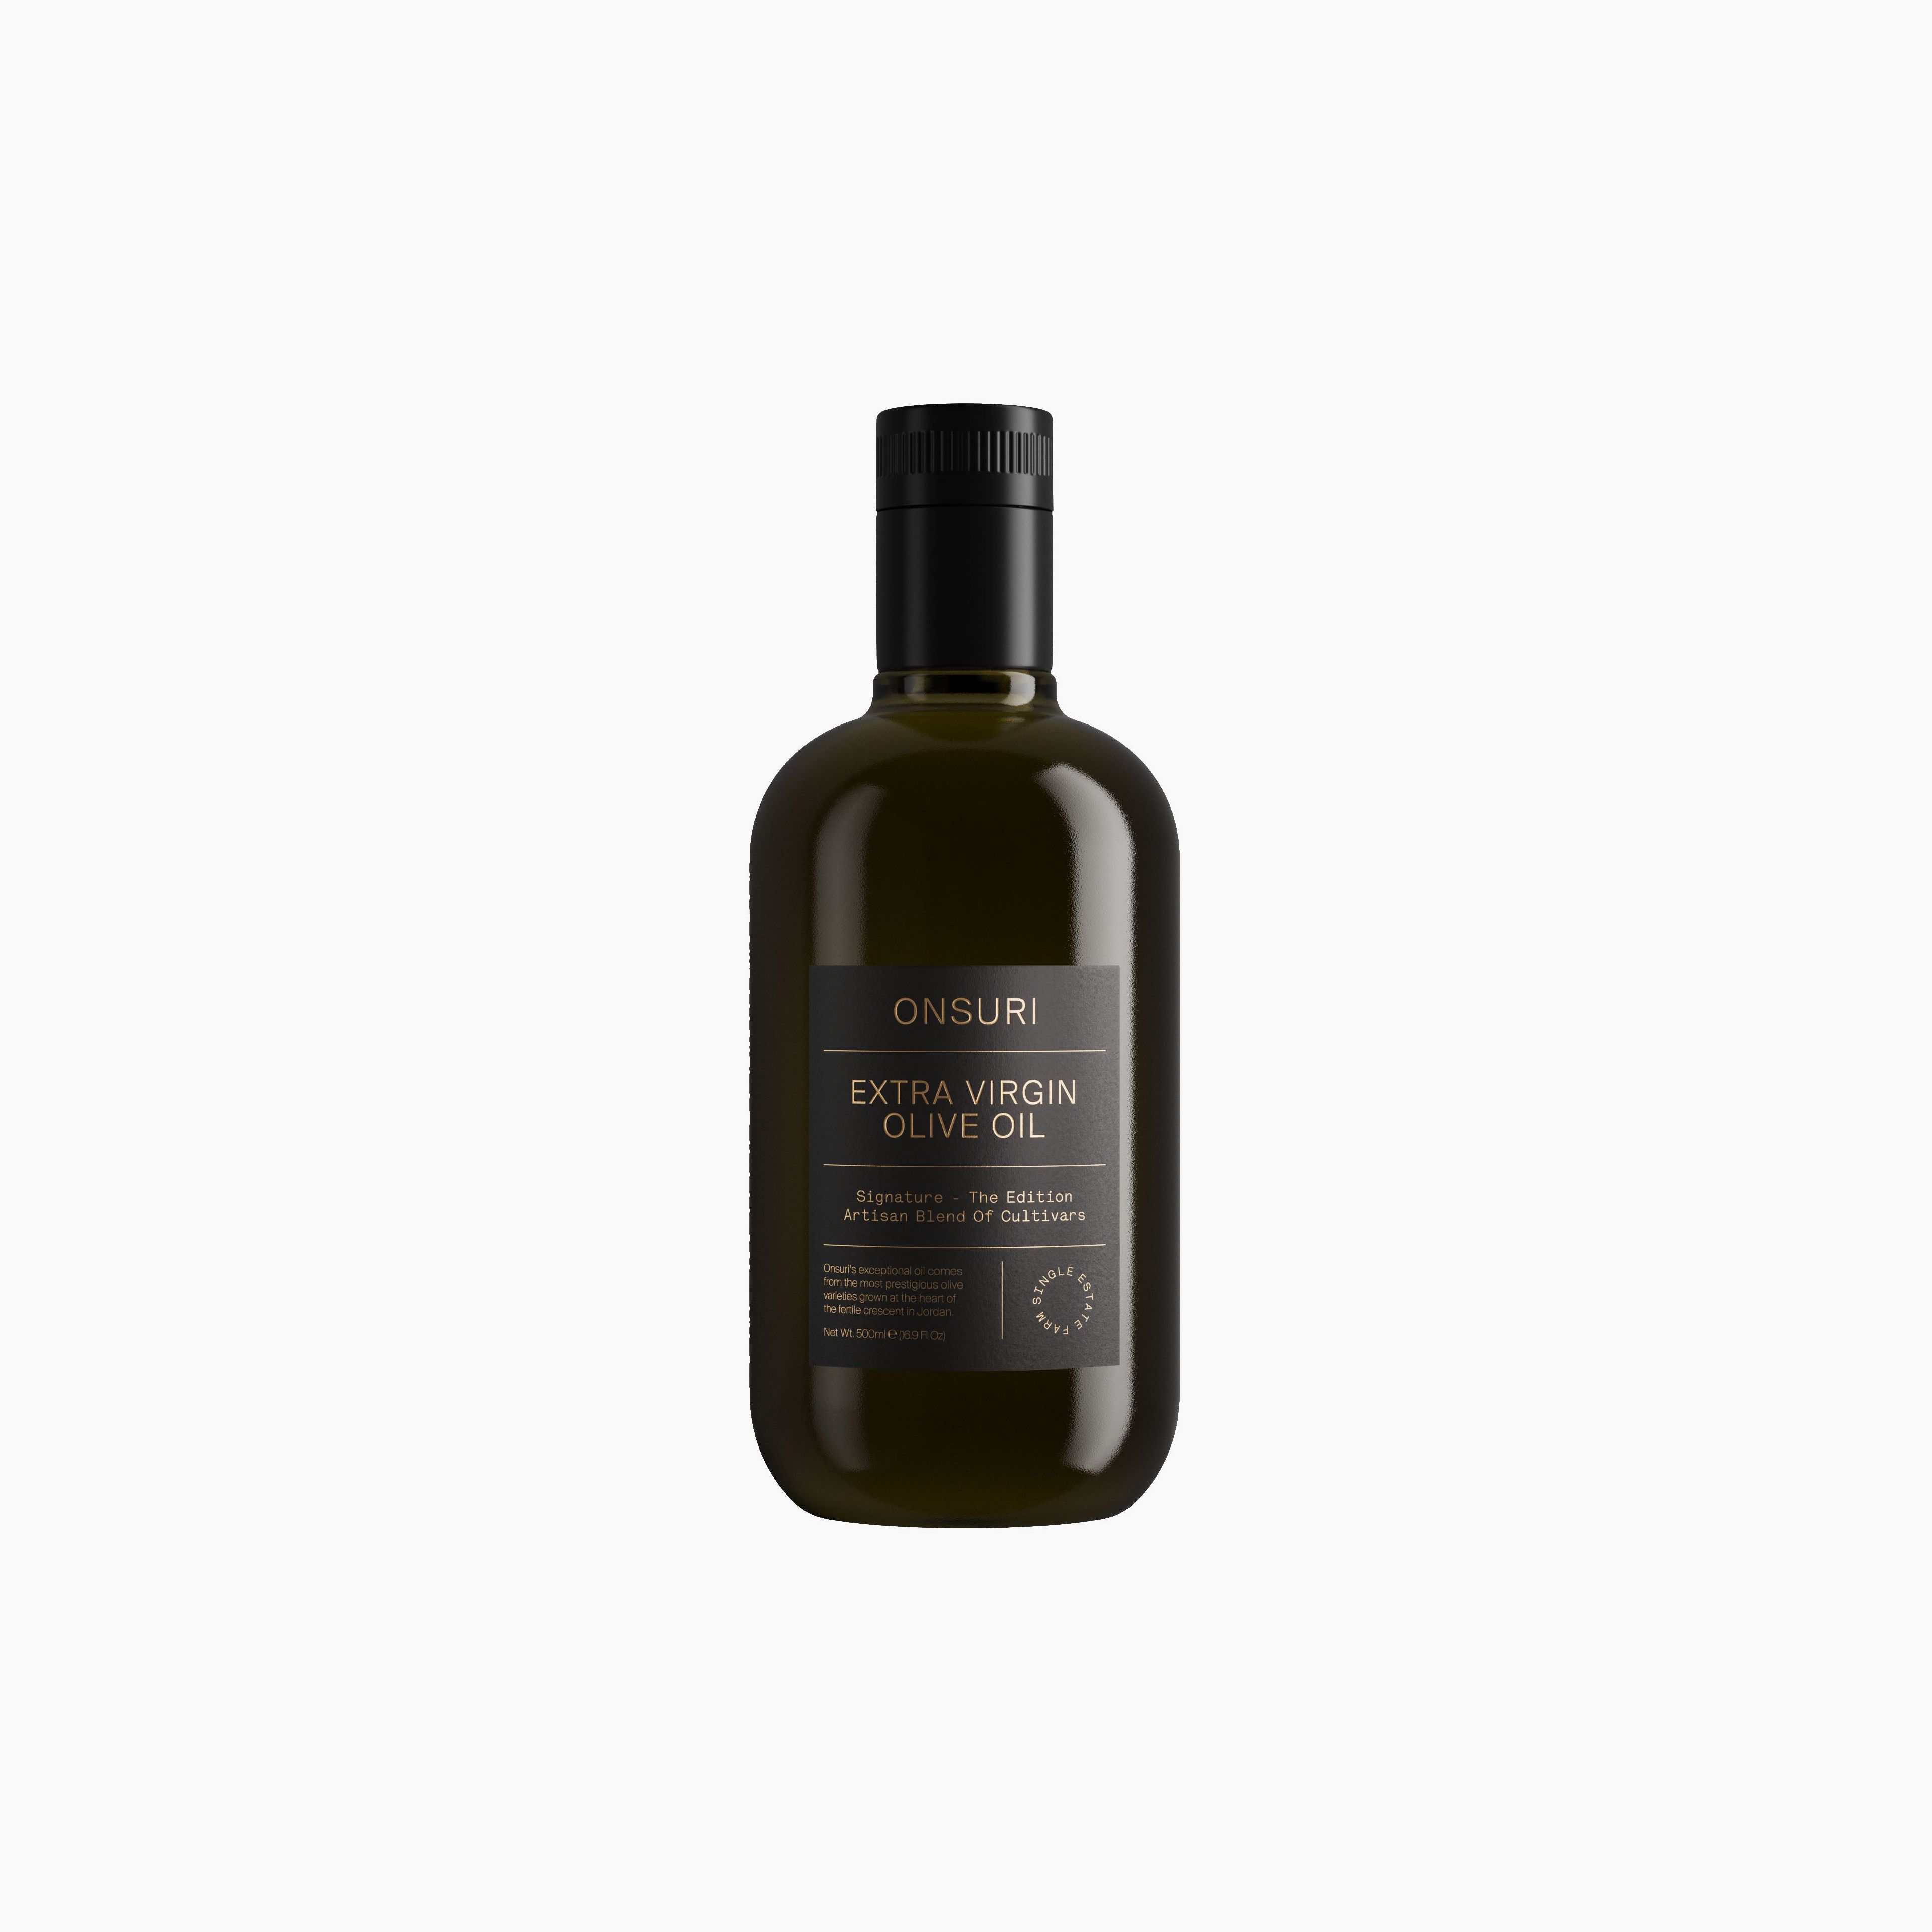 Signature "Edition" Extra Virgin Olive Oil - 500ml (16.9 fl oz) Latest 2023/24 Harvest